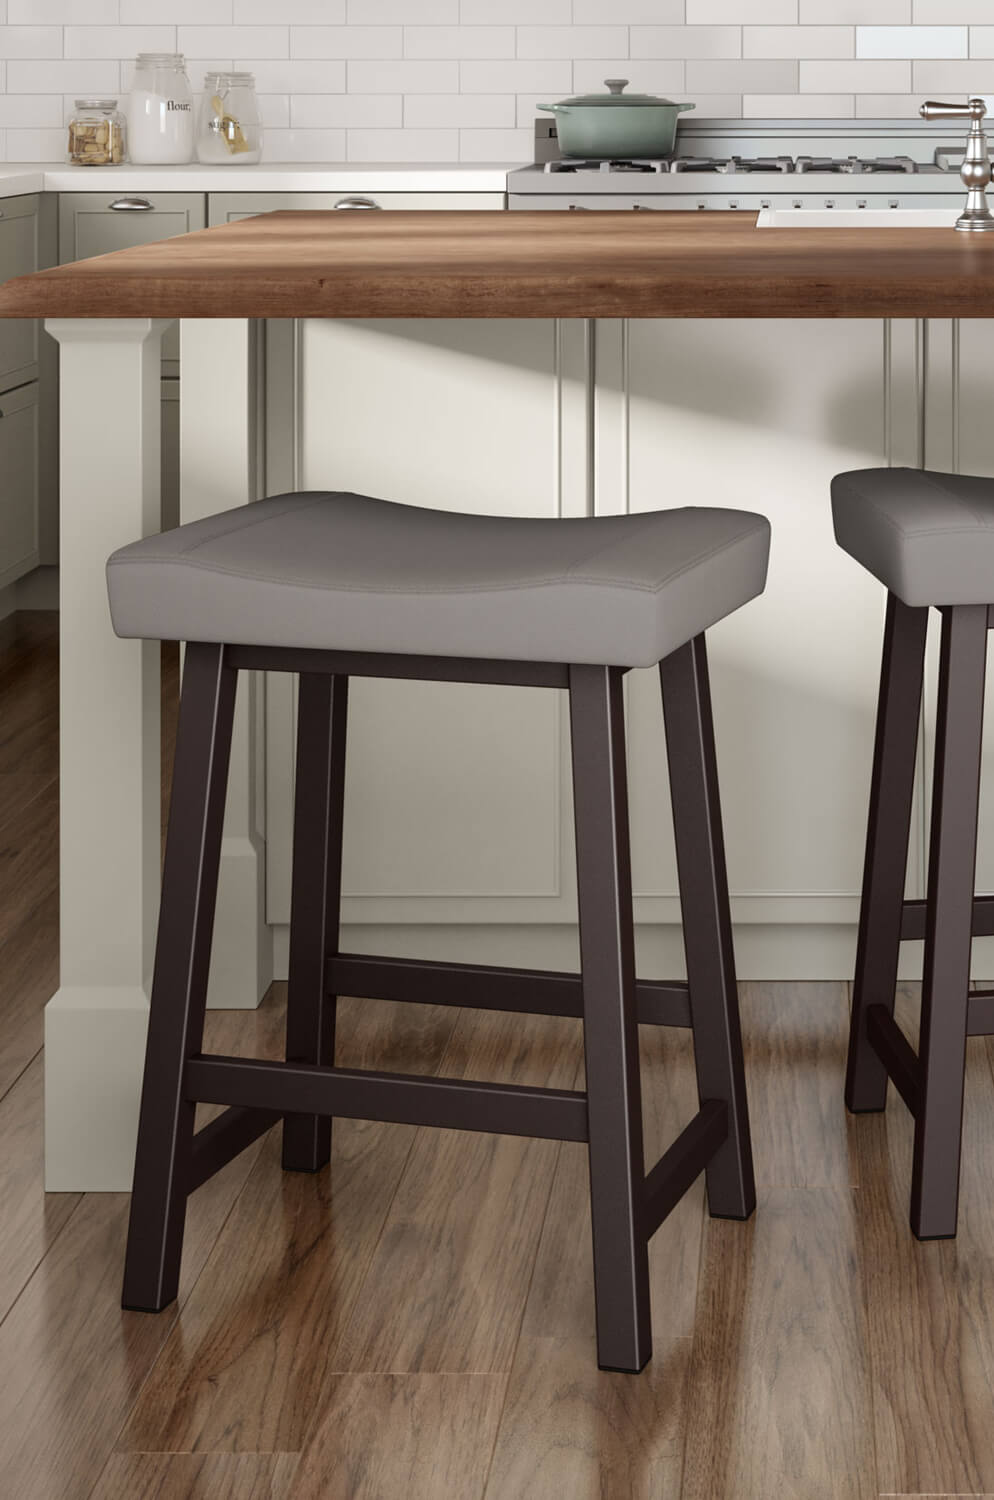 saddle bar stools counter height